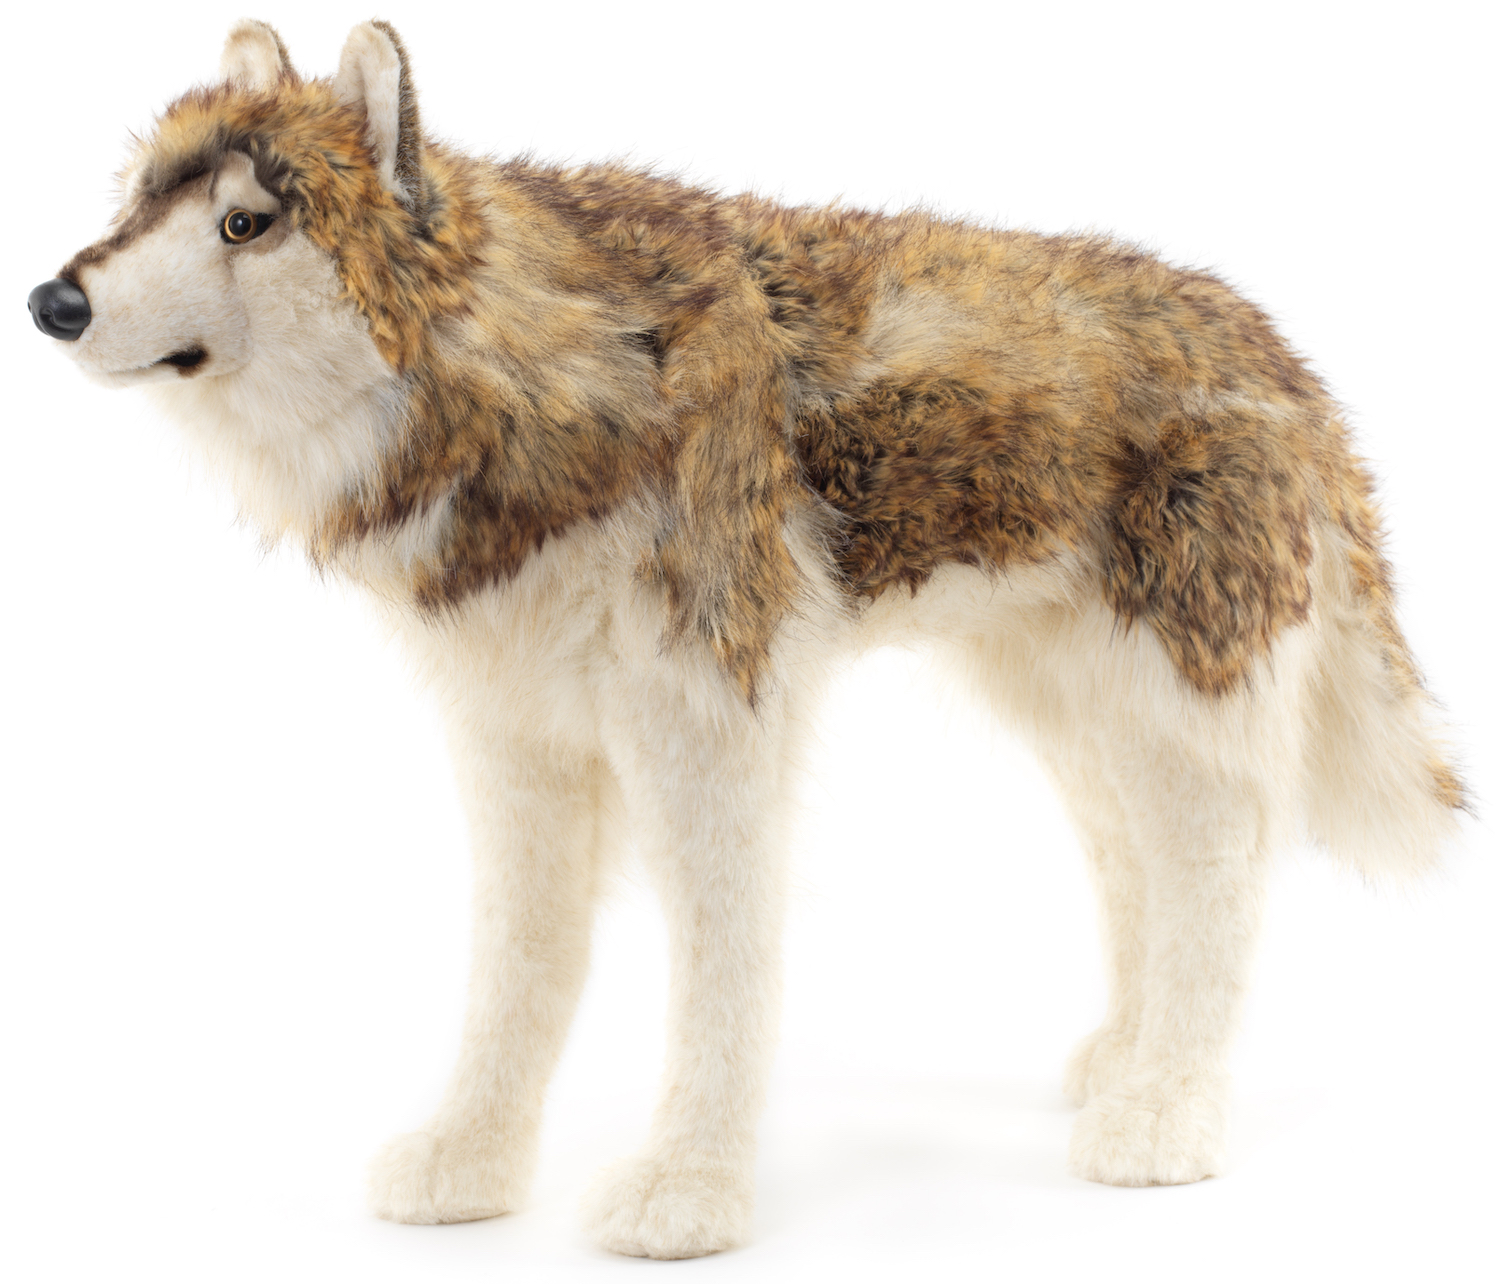  Wolf, standing - 94 cm (length) 